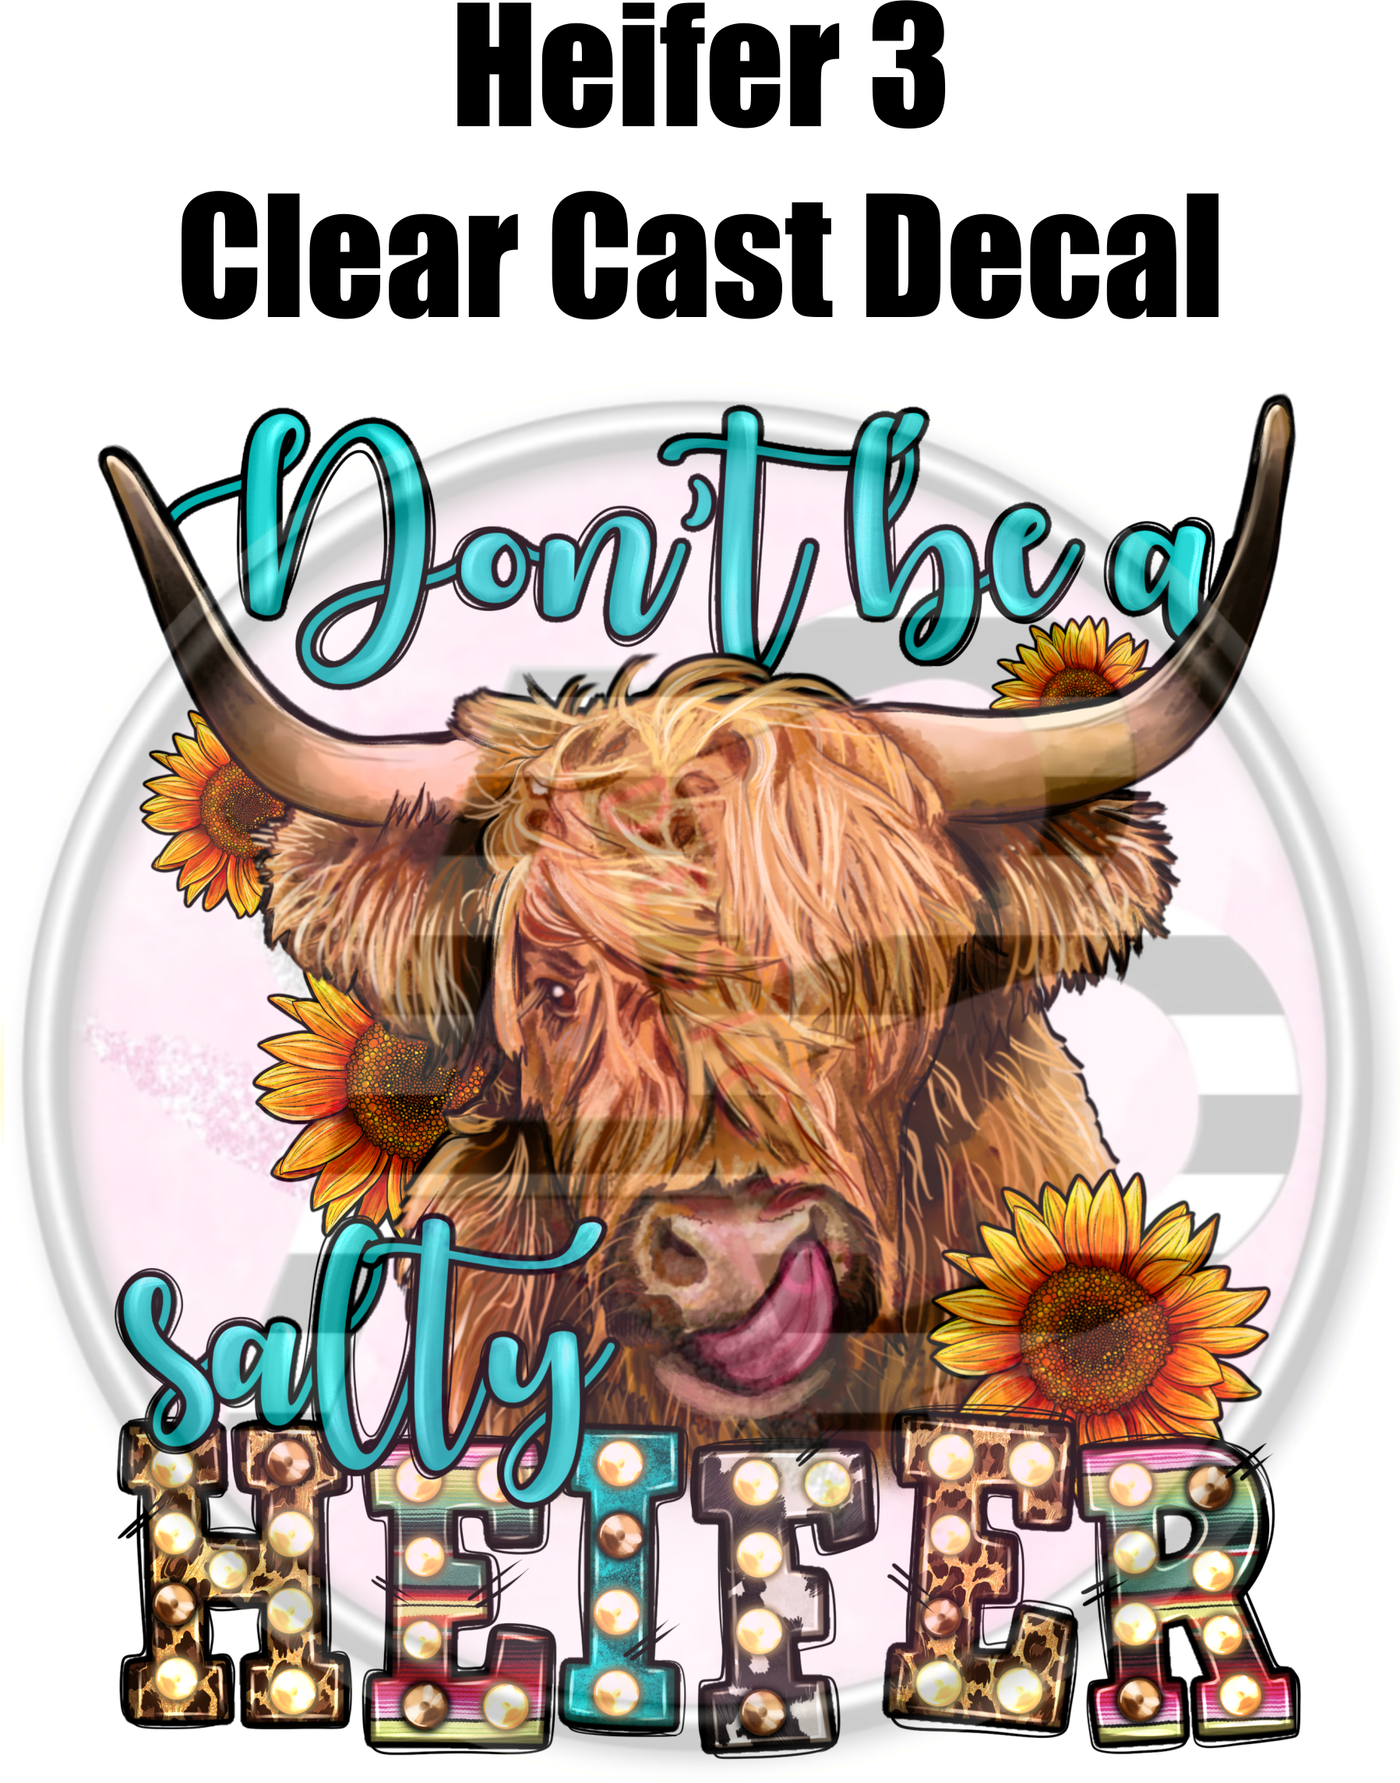 Heifer 3 - Clear Cast Decal